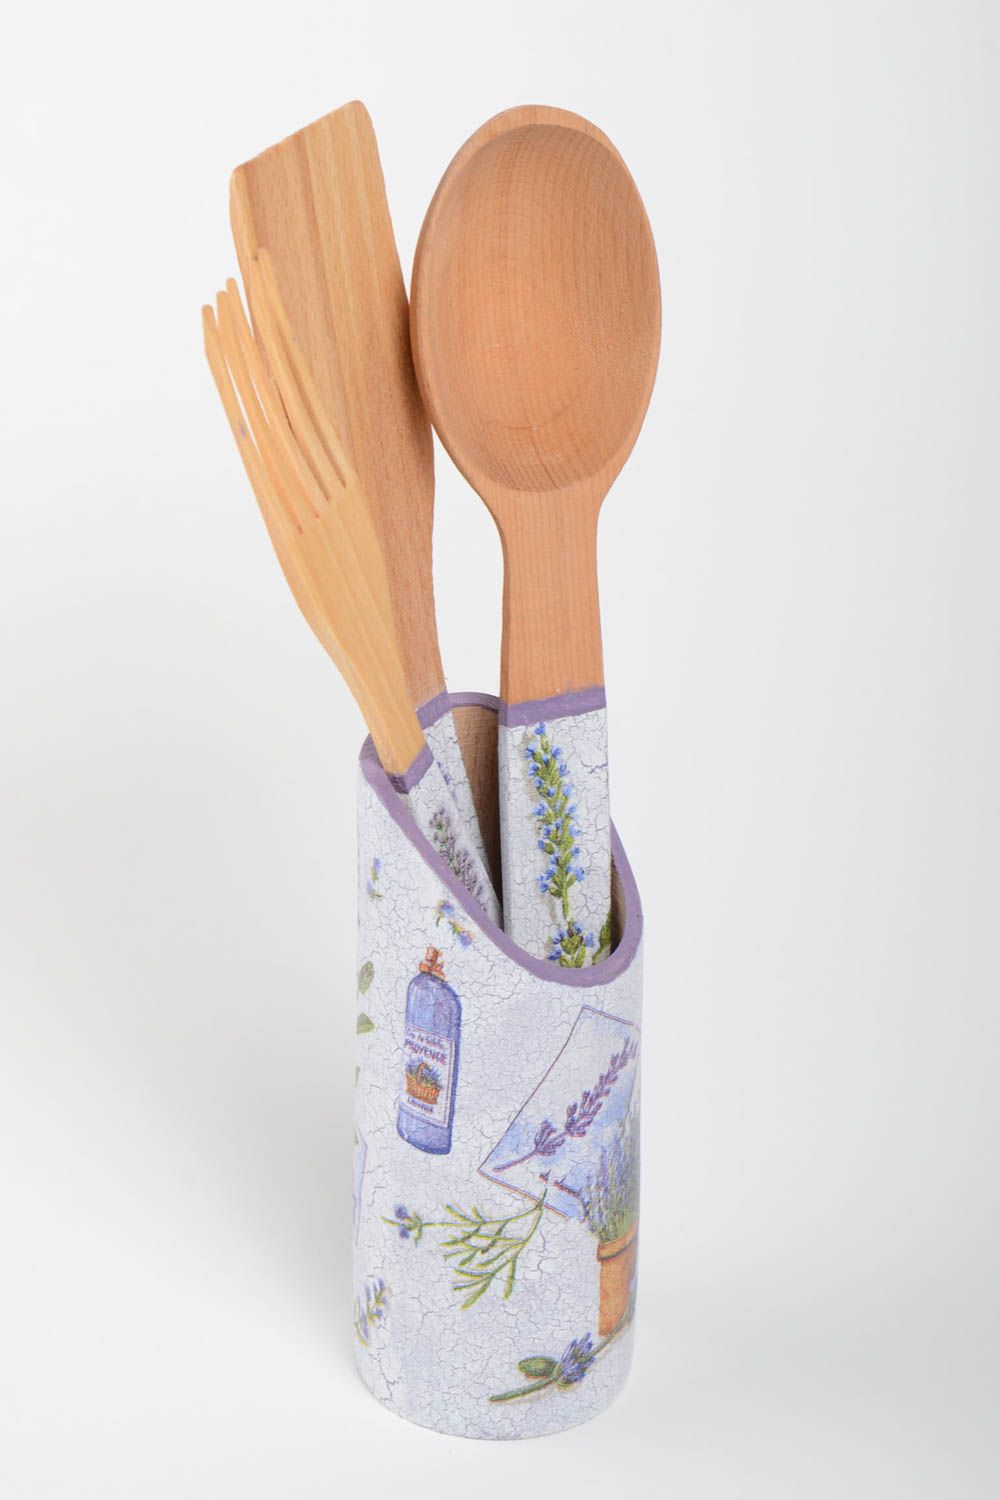 Handmade kitchen utensils set wooden spatula fork spoon decoupage ideas photo 4